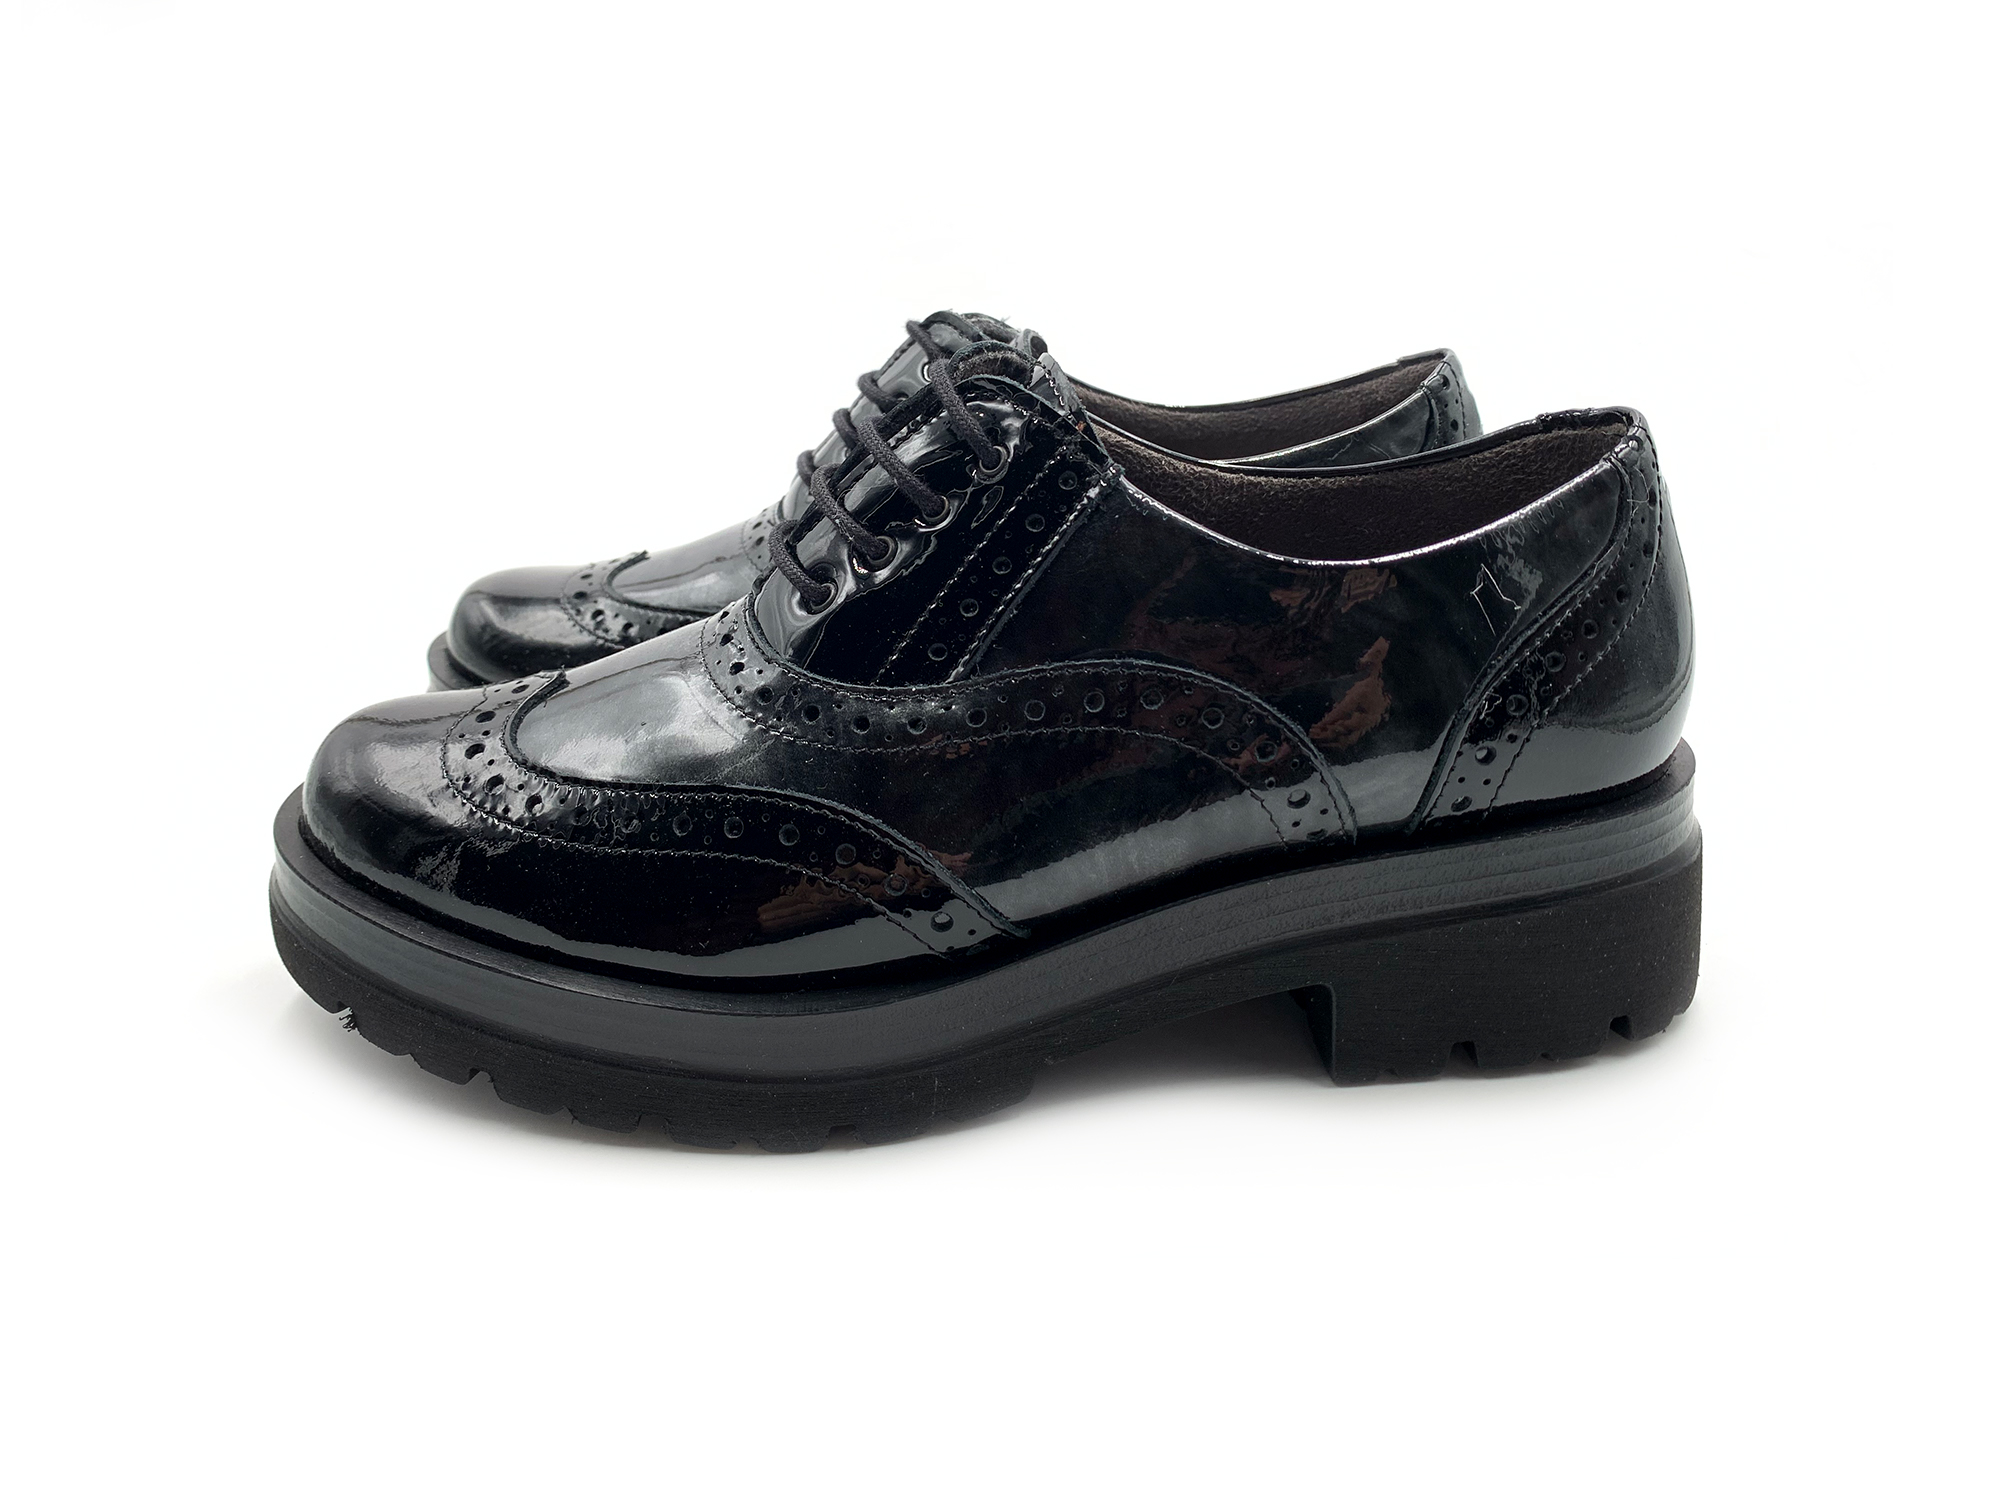 Pitillos 5362 Zapato Charol piel Negro cordones Mujer - Valero's